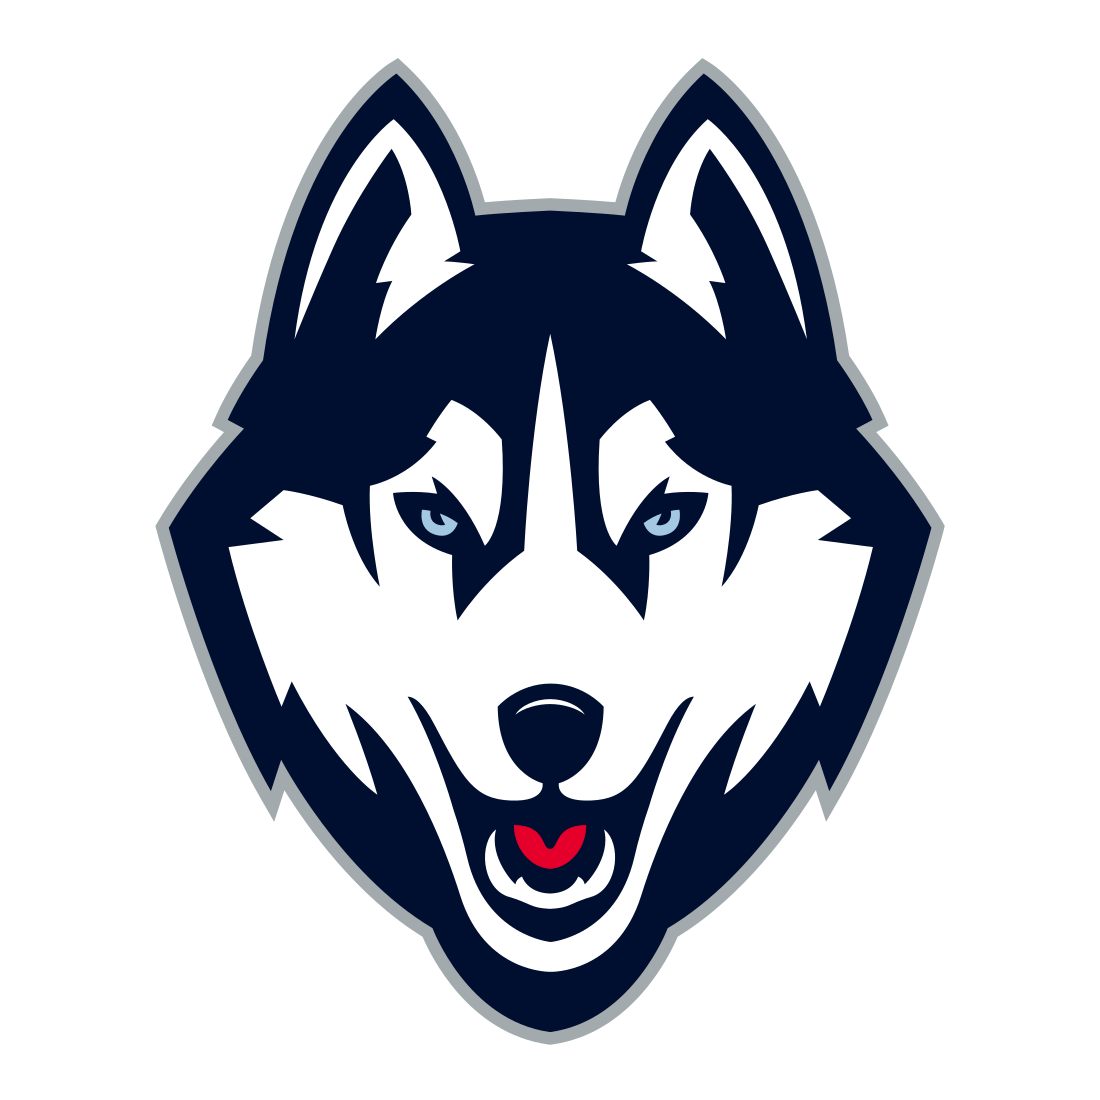 Connecticut (UConn) Huskies logo